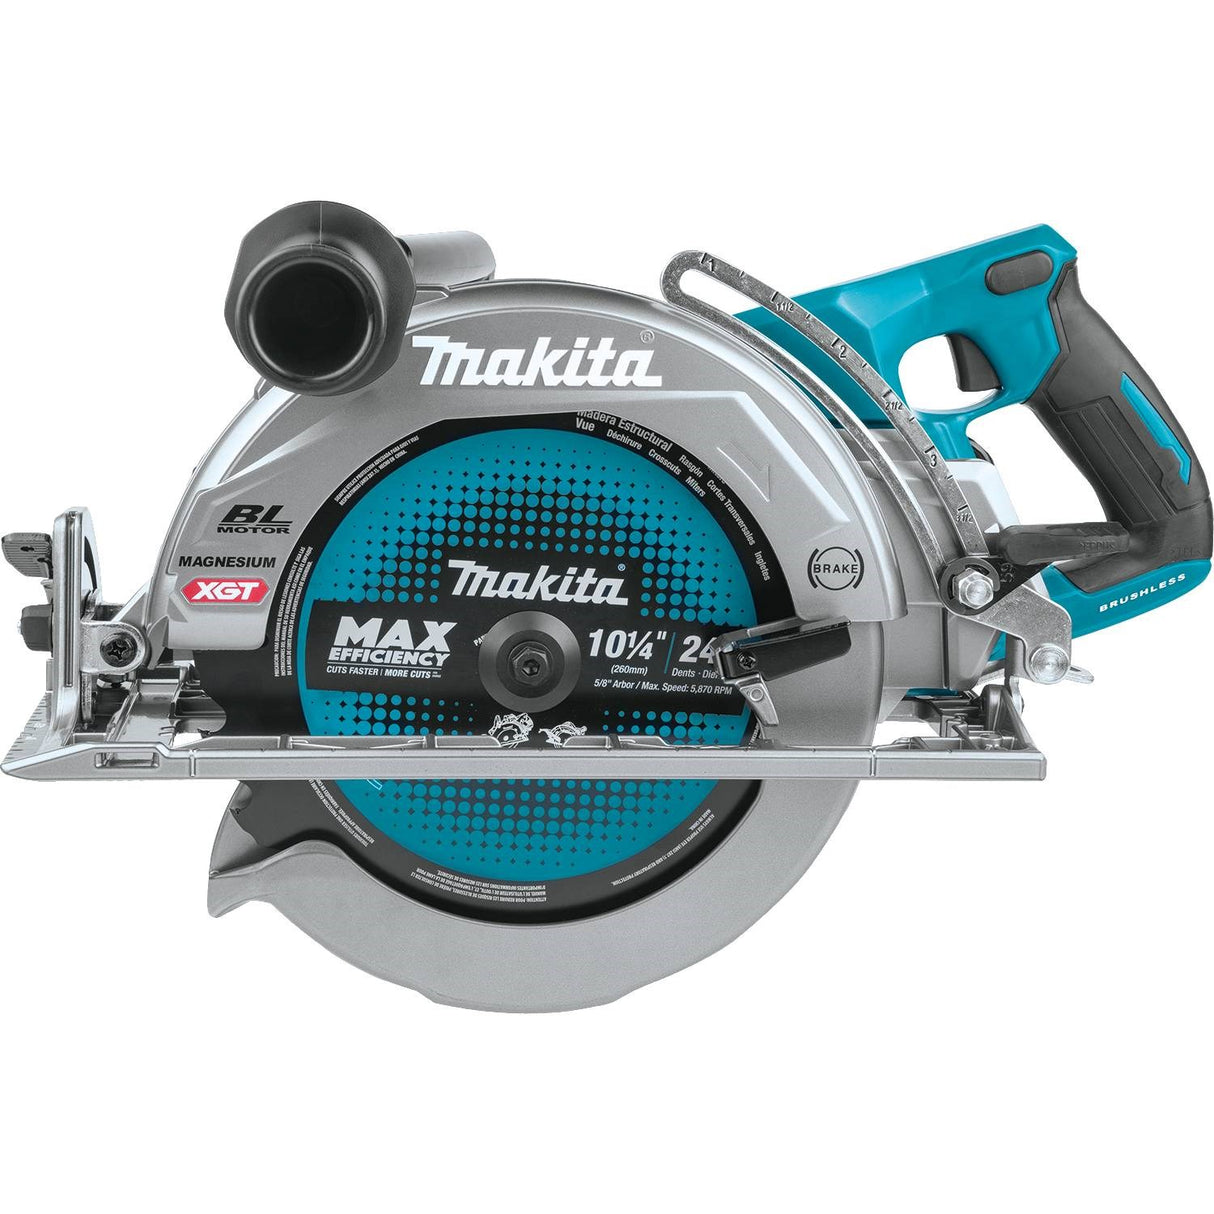 Makita GSR02Z 40V max XGT® Rear Handle 10-1/4" Circular Saw - 2